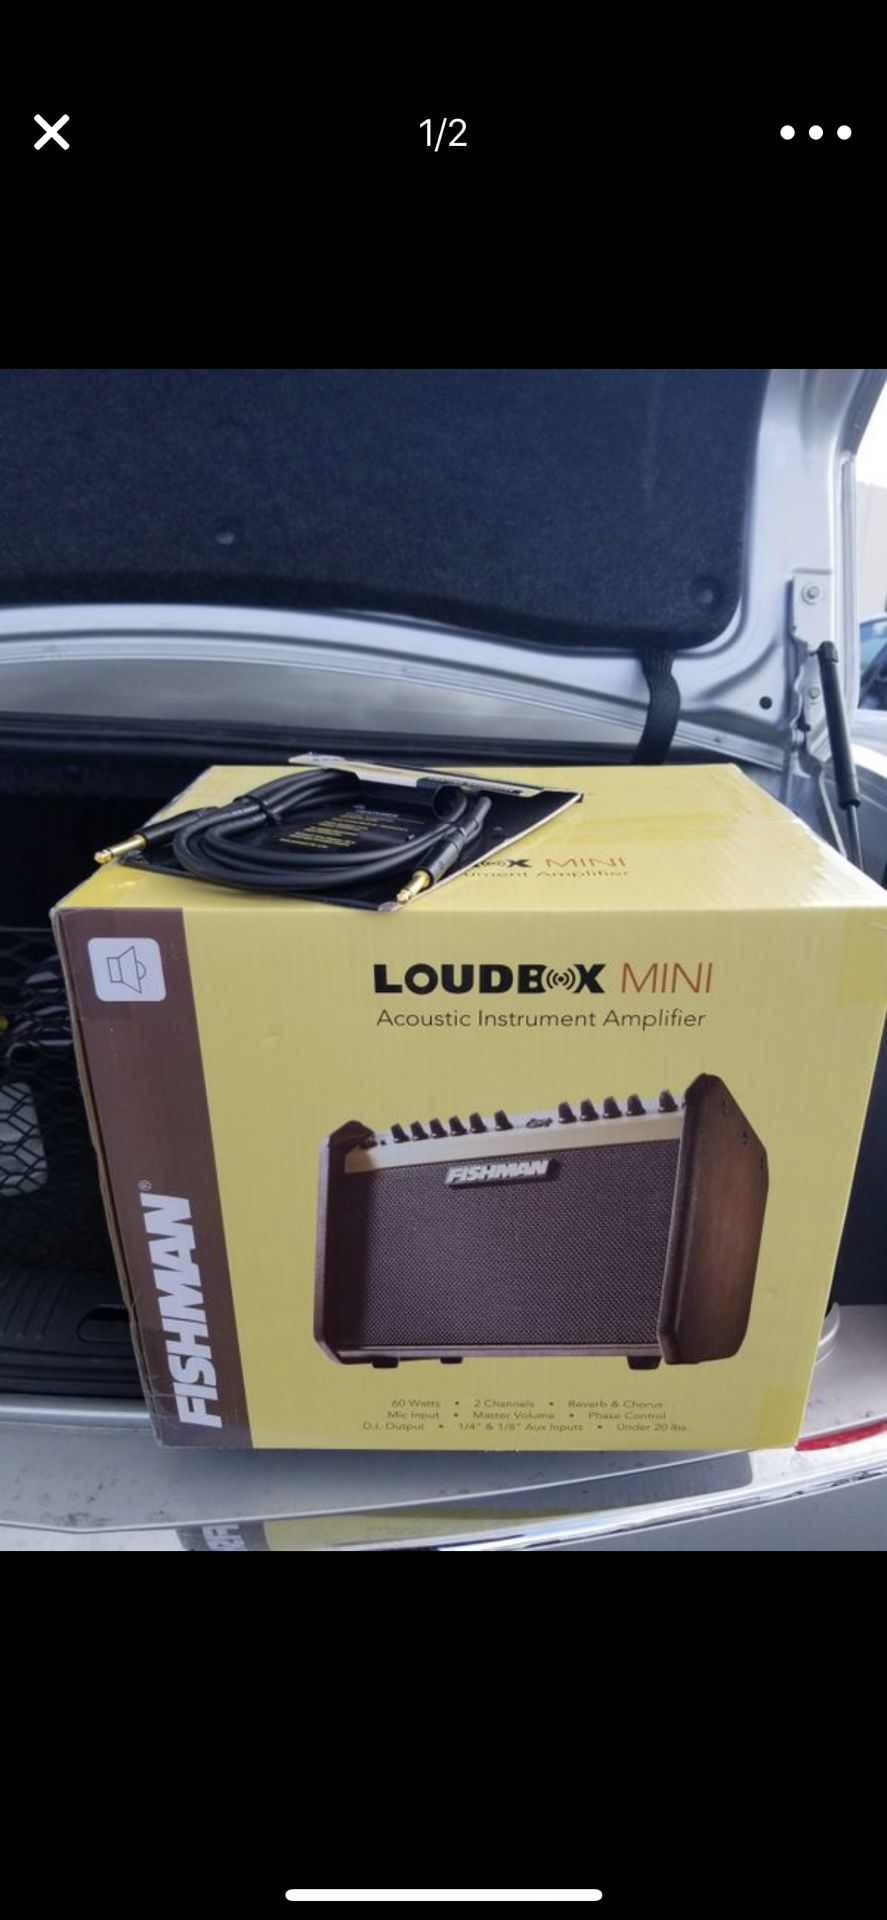 Fishamn loudbox mini acoustic instrument amplifier